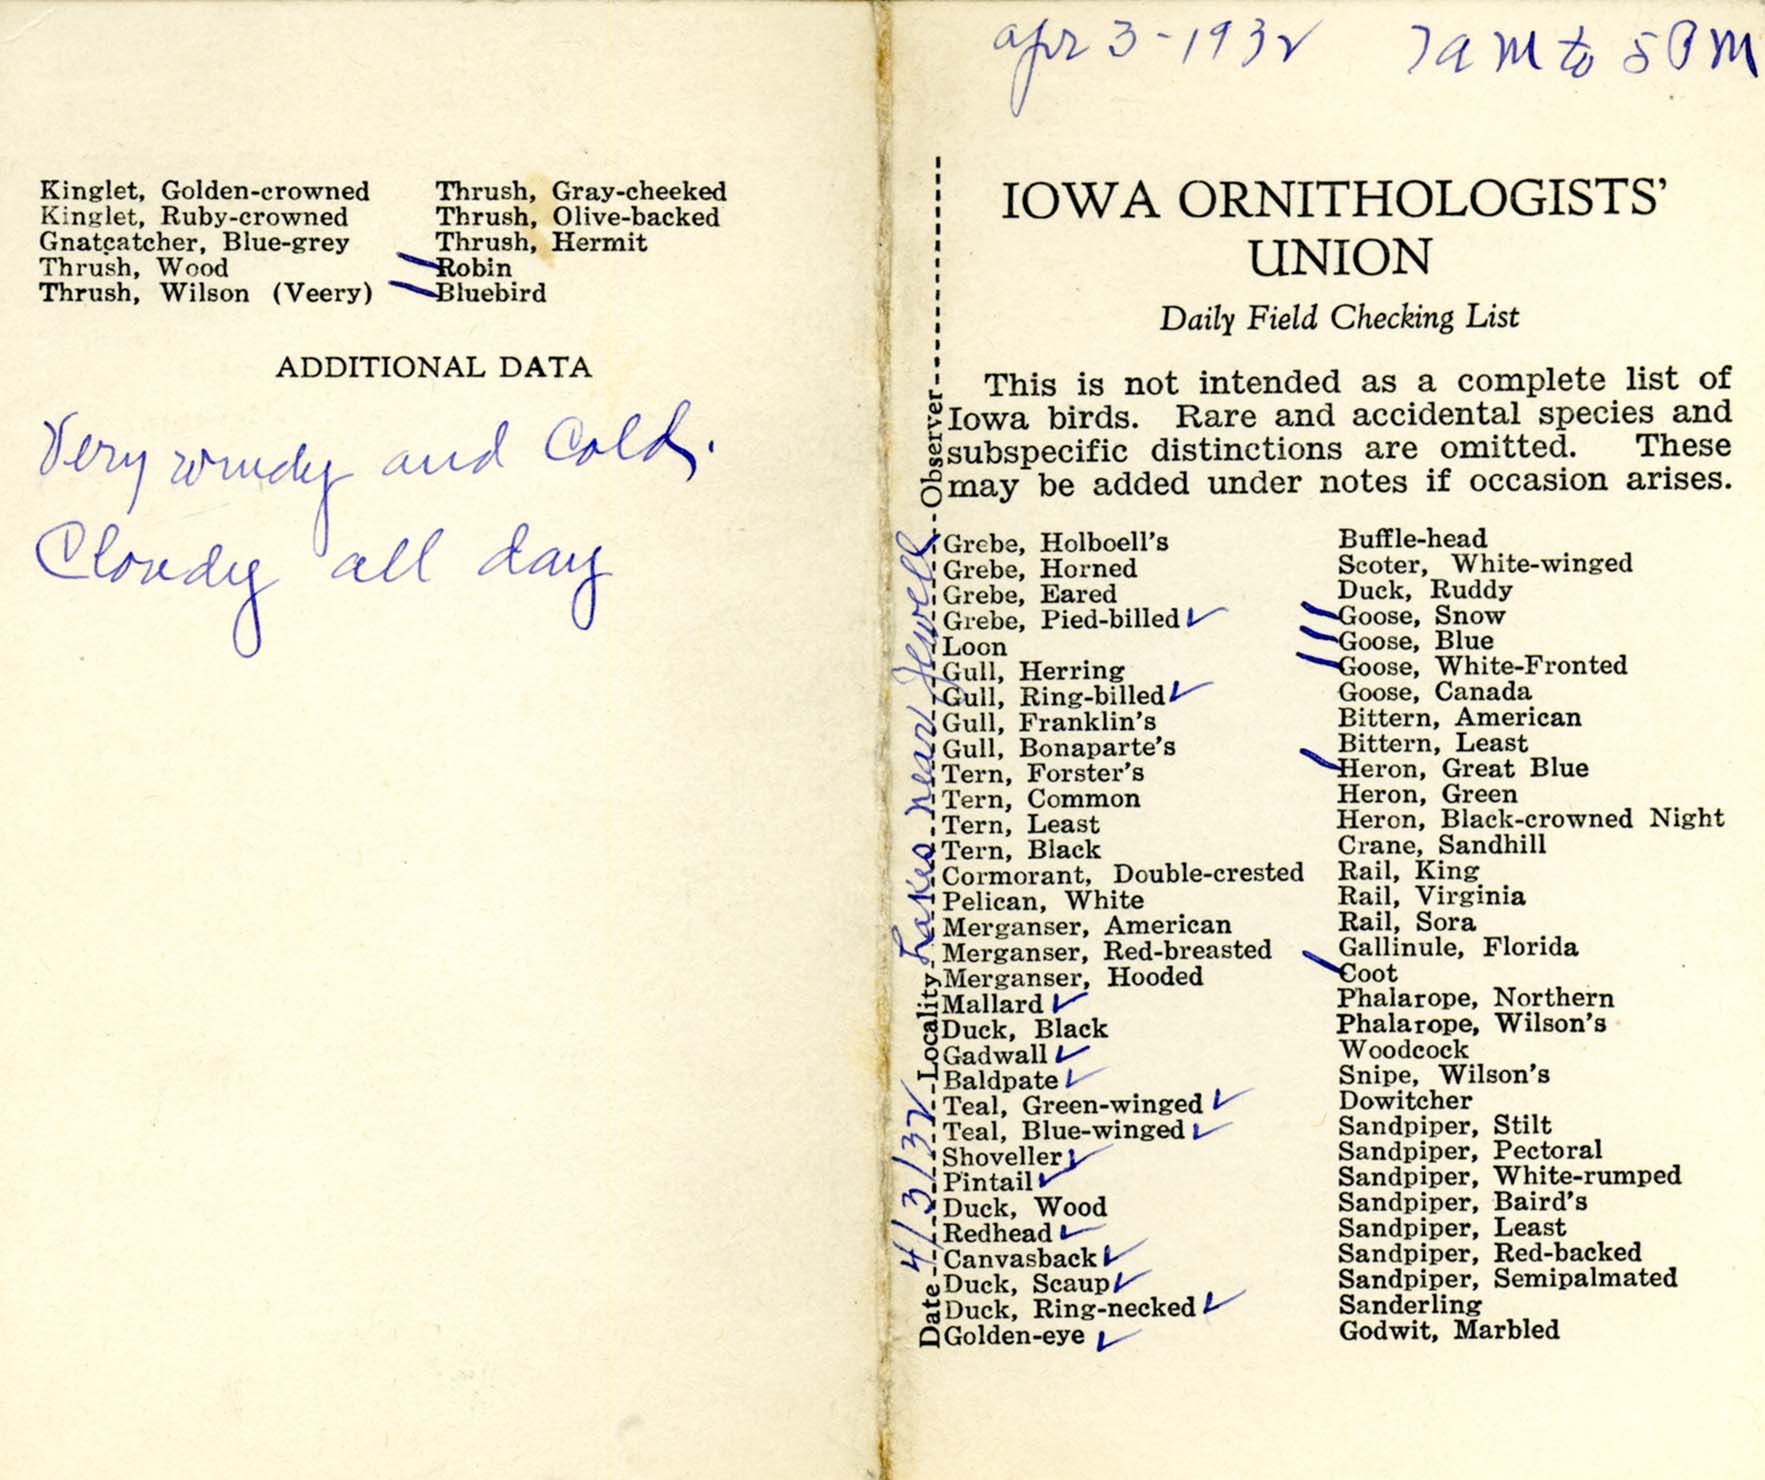 Daily field checking list, Walter Rosene, April 3, 1932 copy